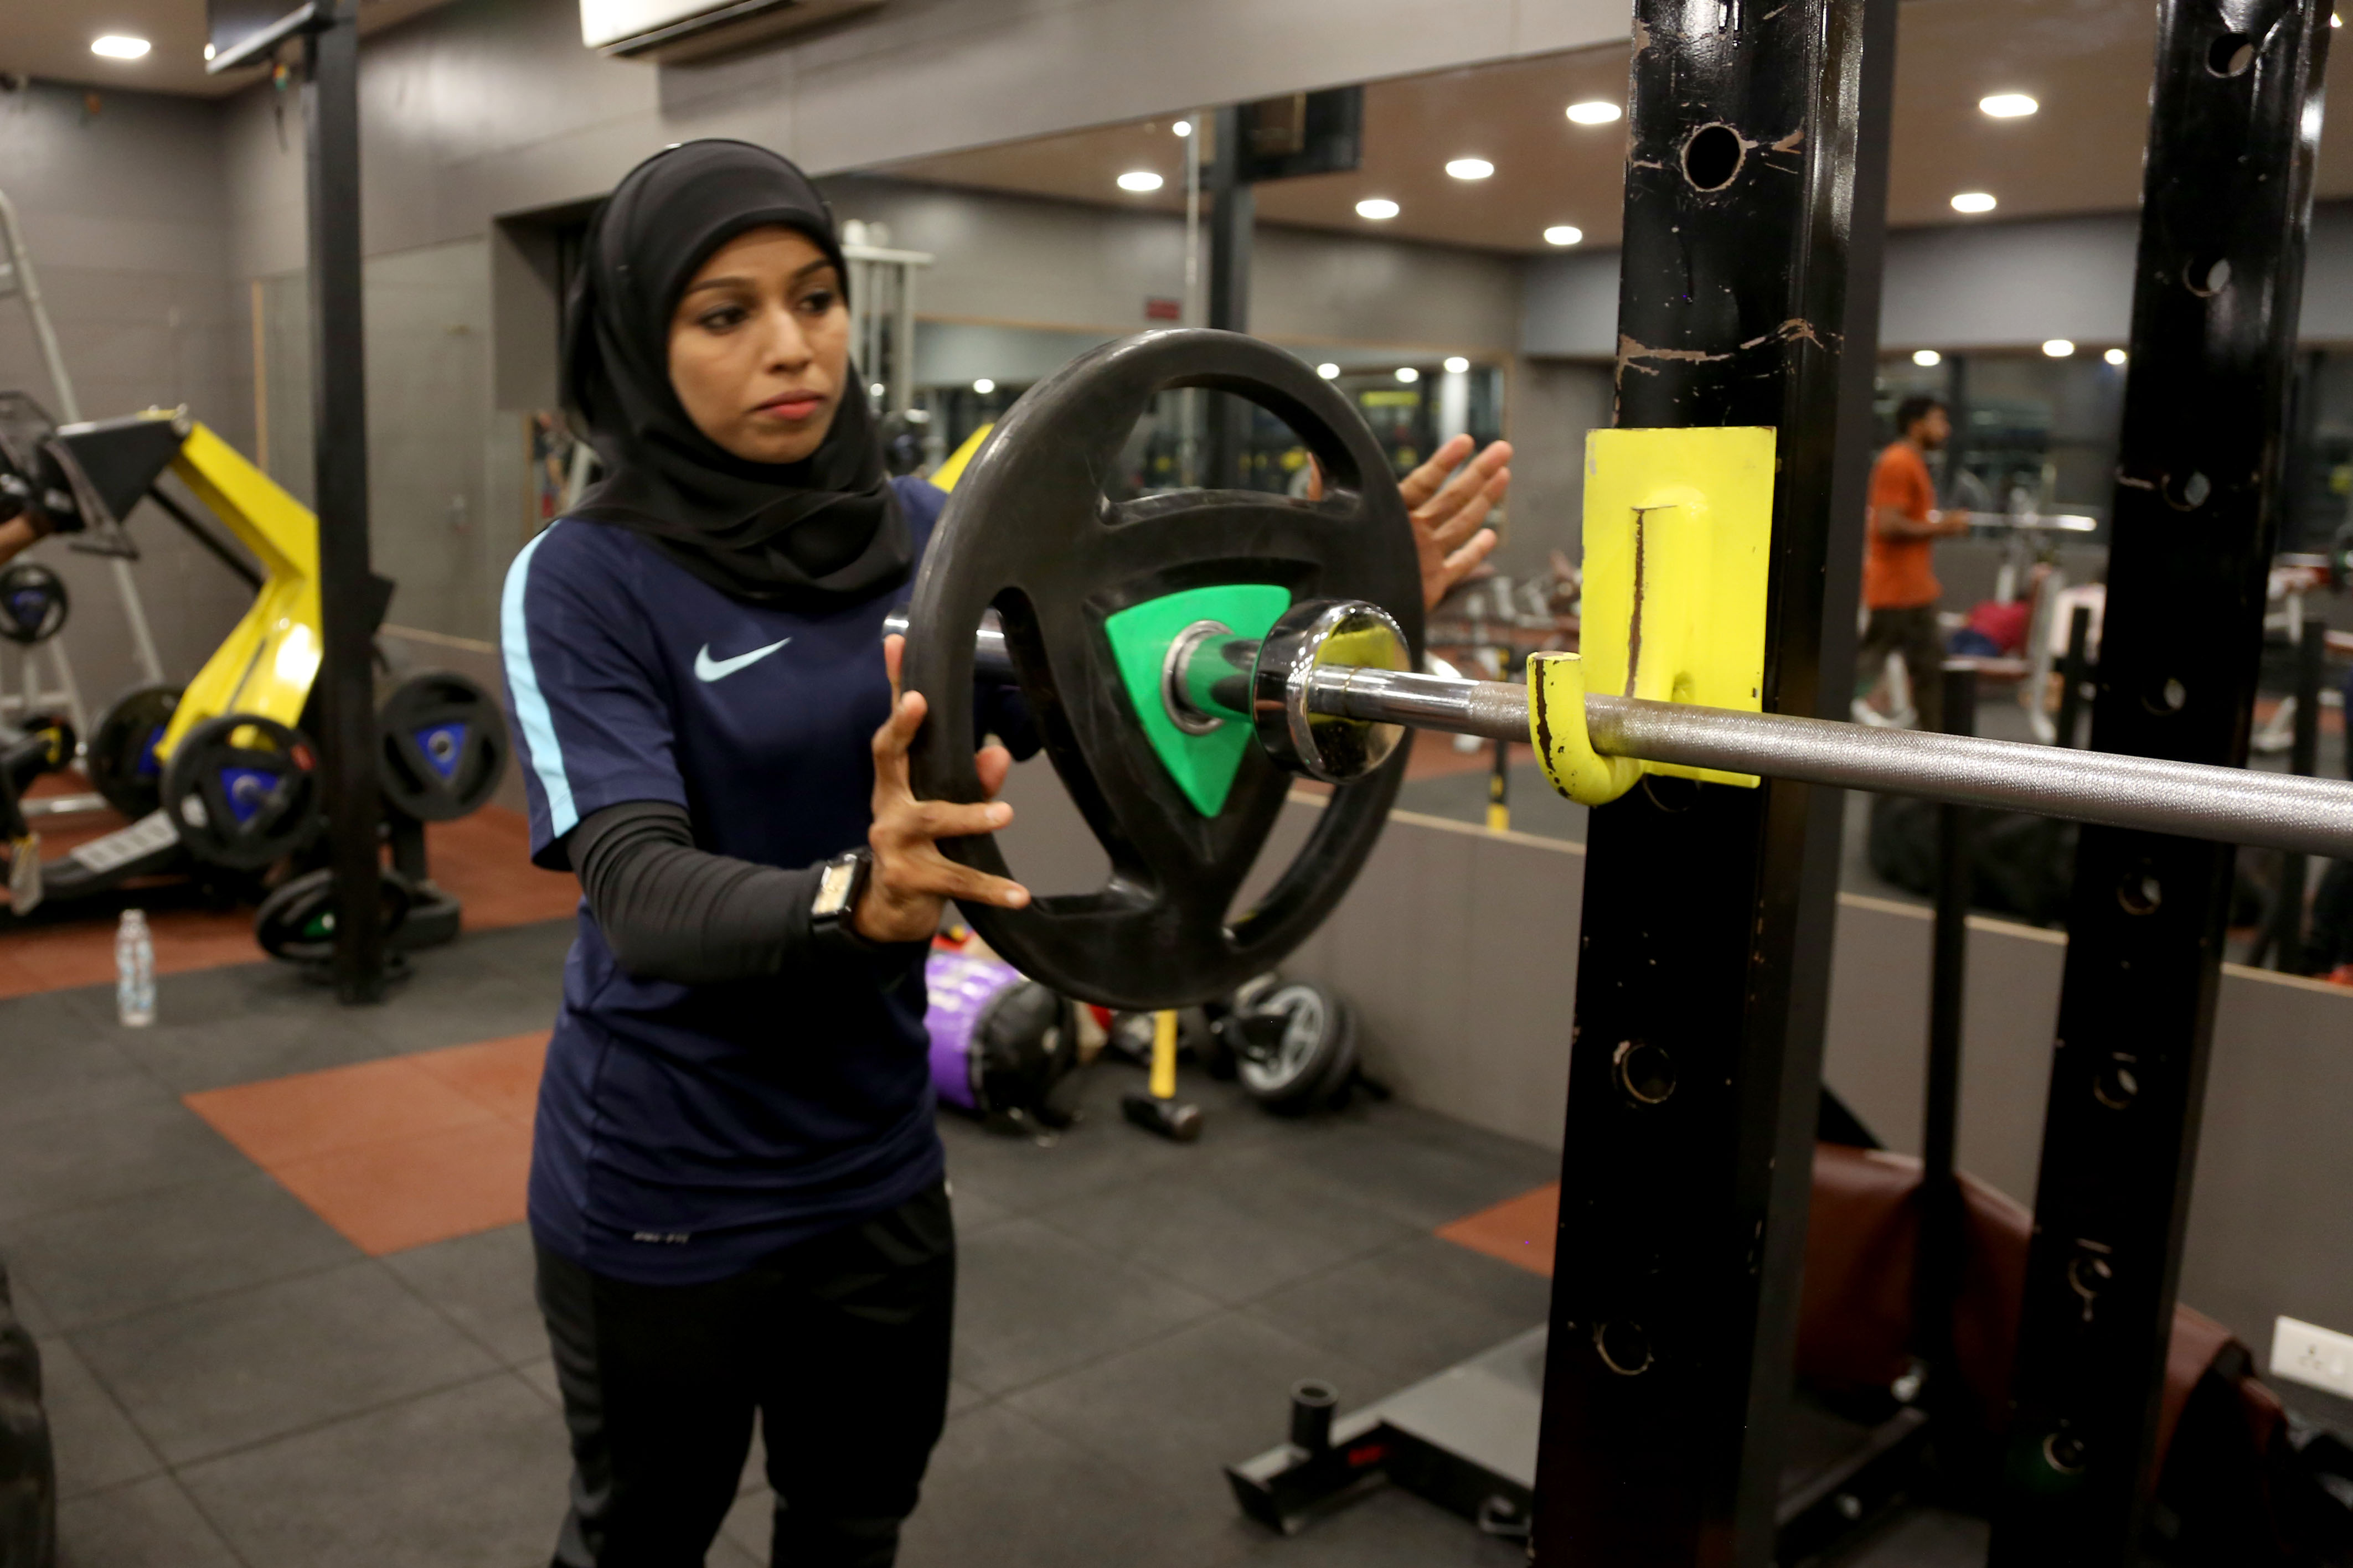 Majiziya Bhanu, Hijab-wearing Muslim bodybuilder, Mr Kerala competition, Bodybuilding, Strongest woman, Kerala, Sports news